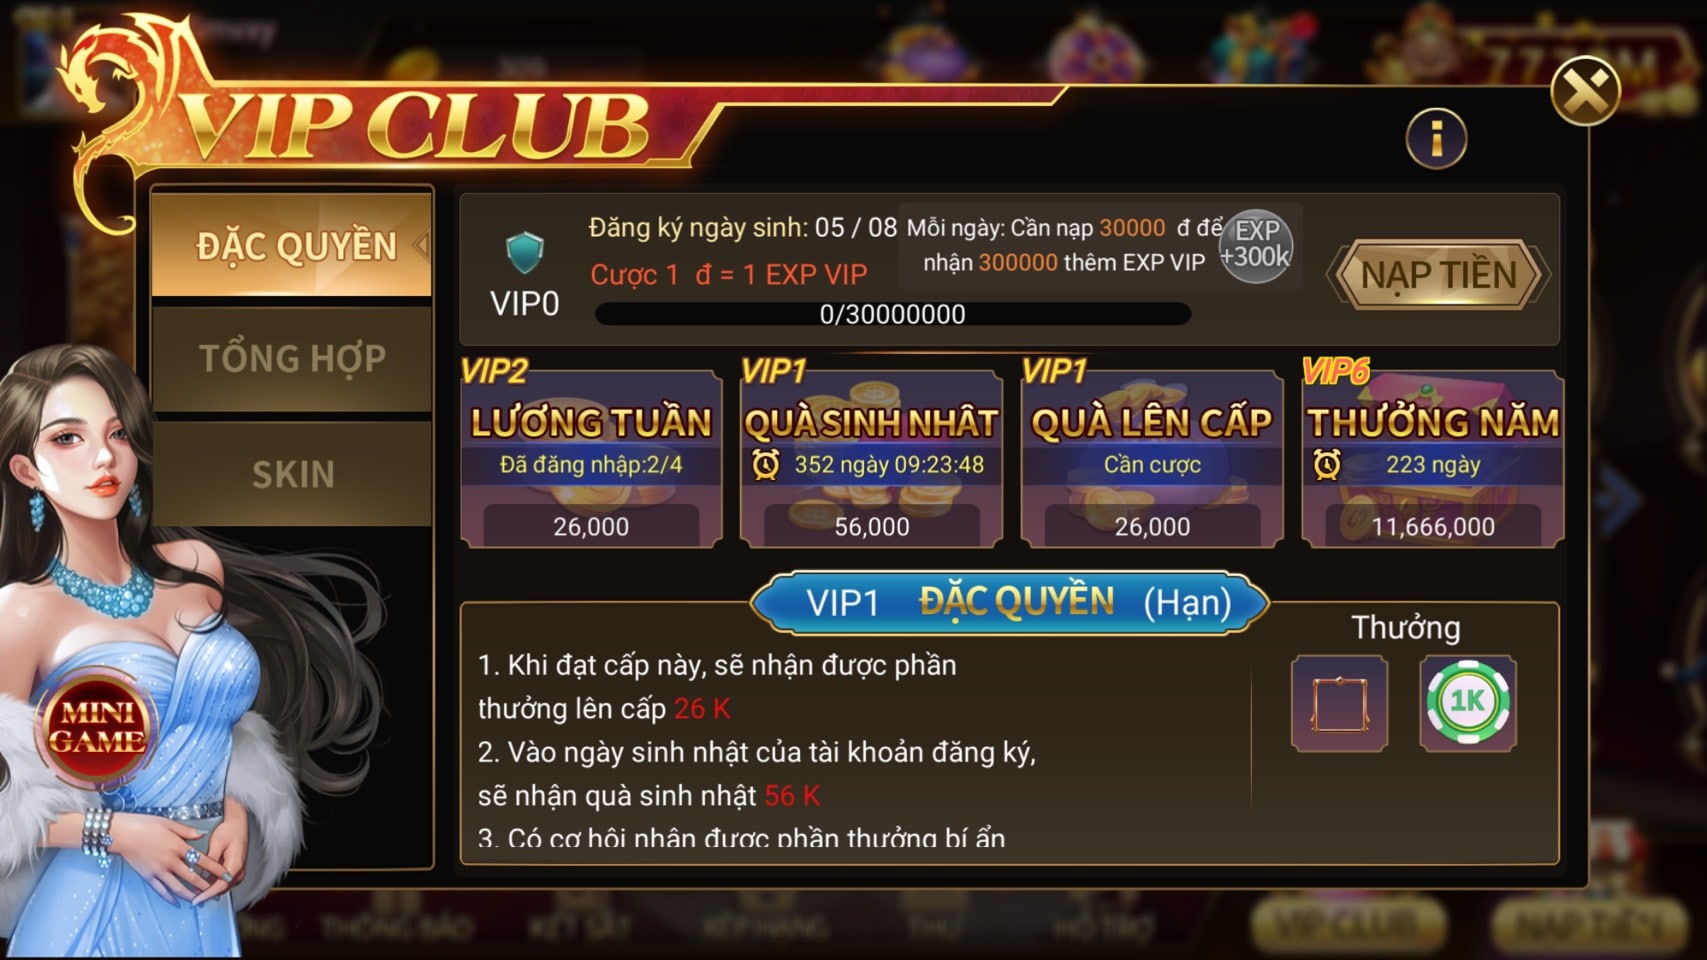 Vip Club KWIN